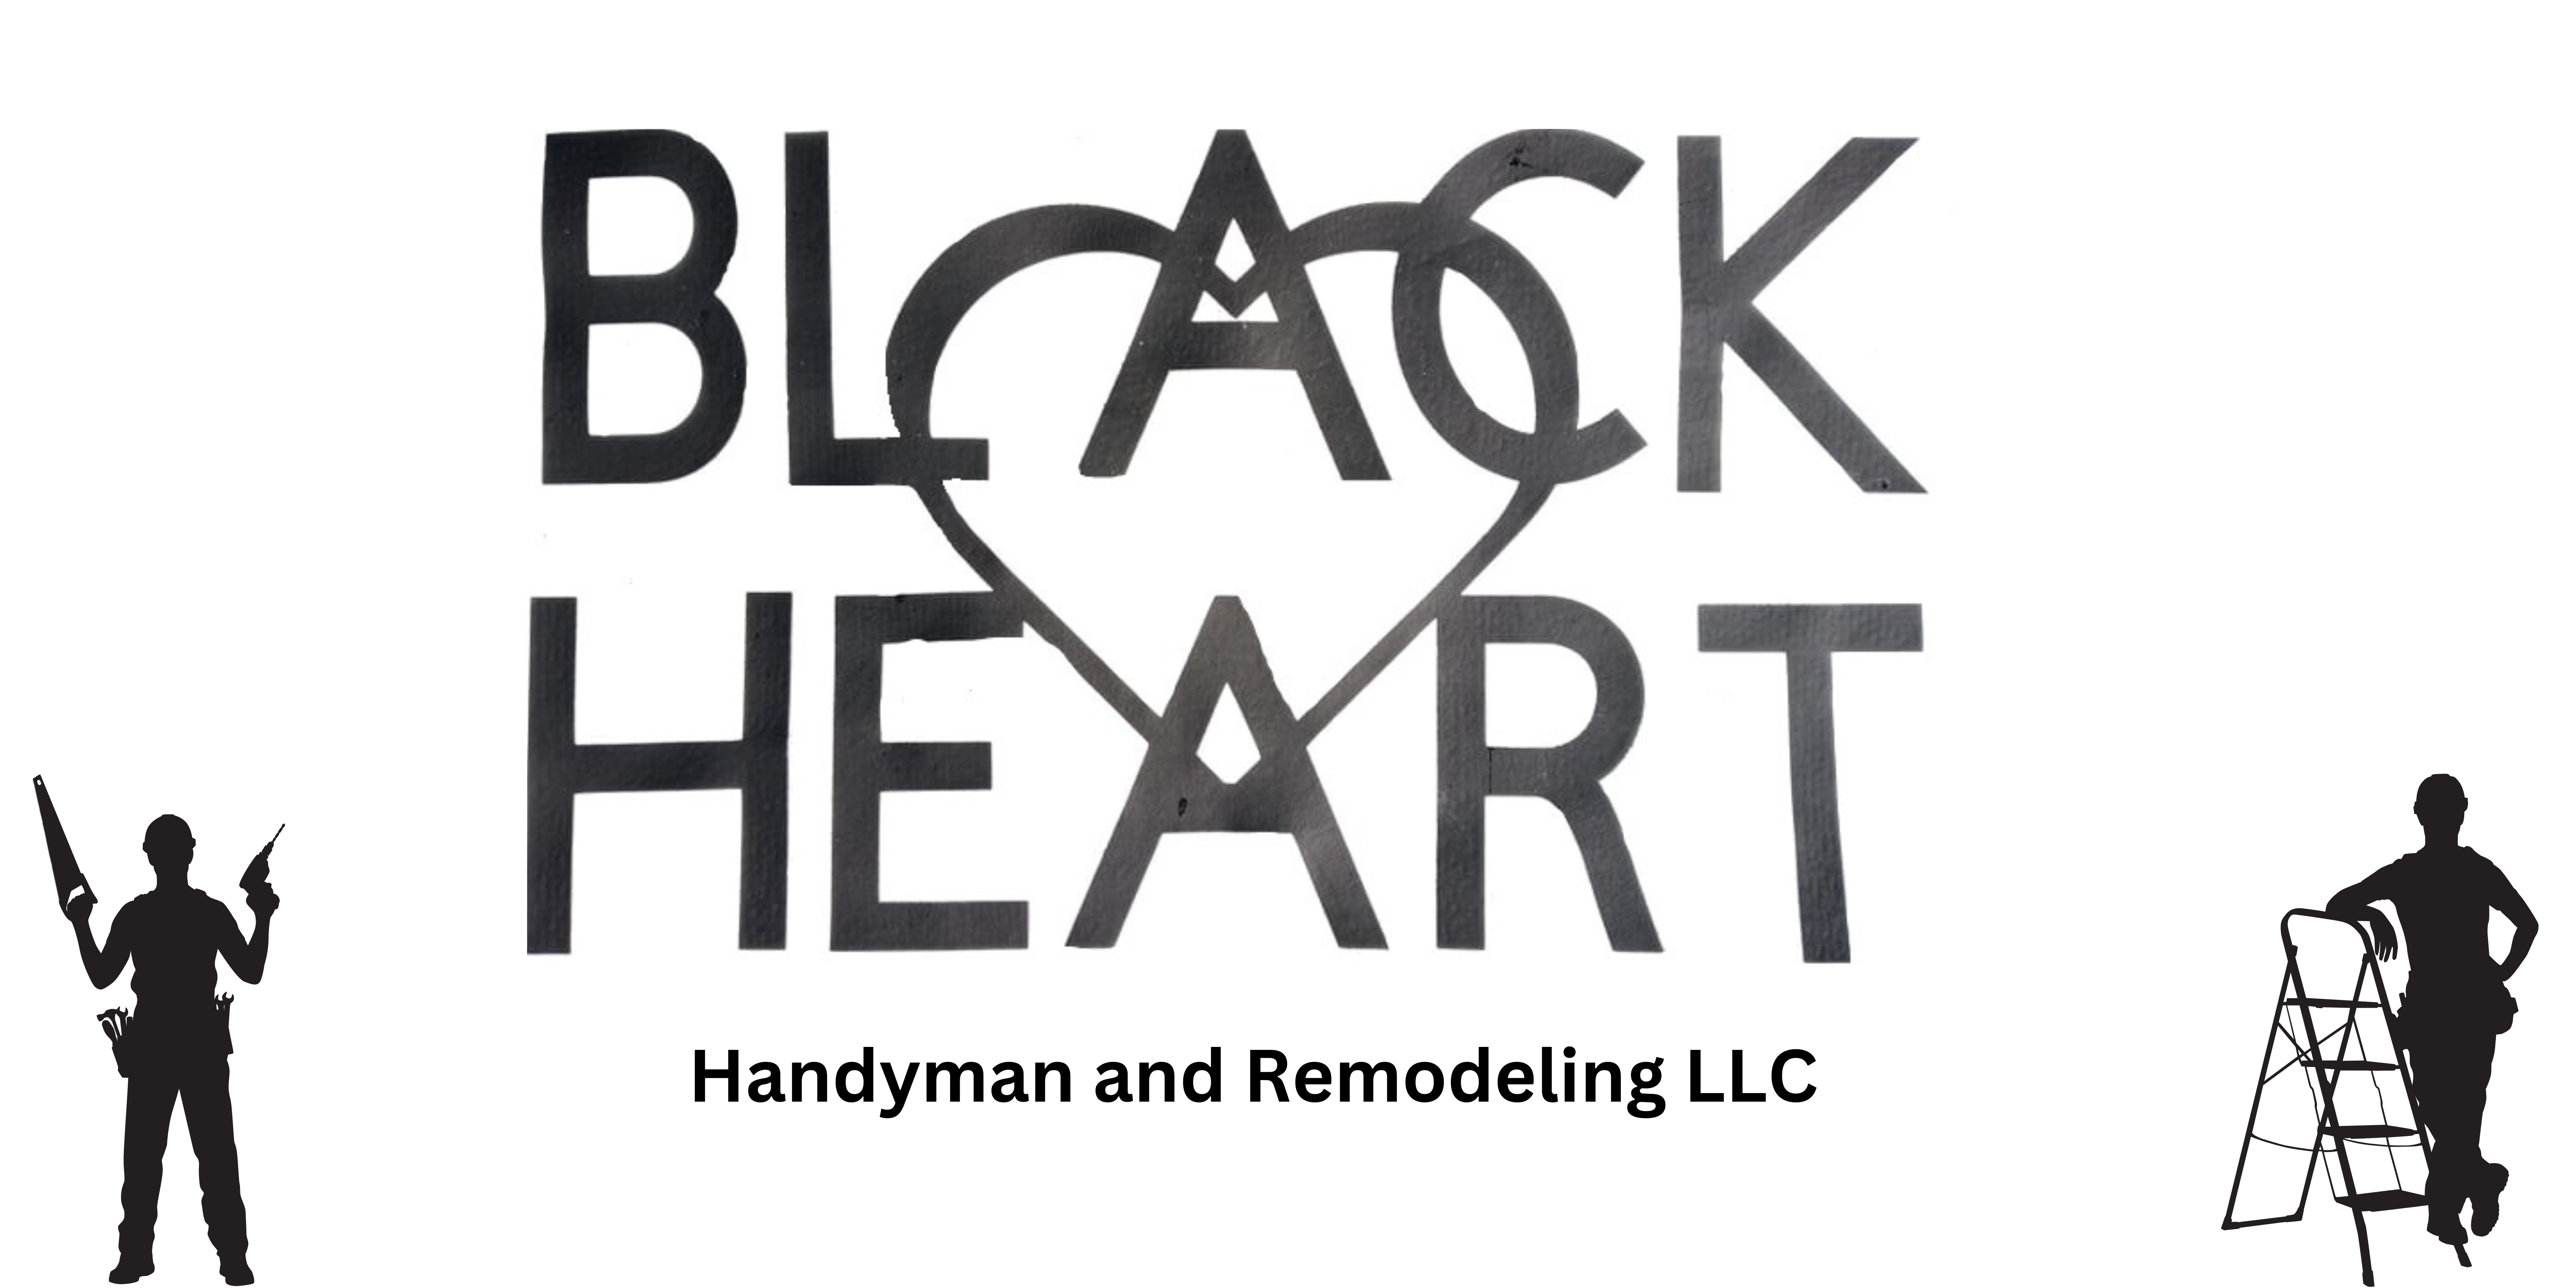 Blackheart Handyman and Remodeling, LLC Logo